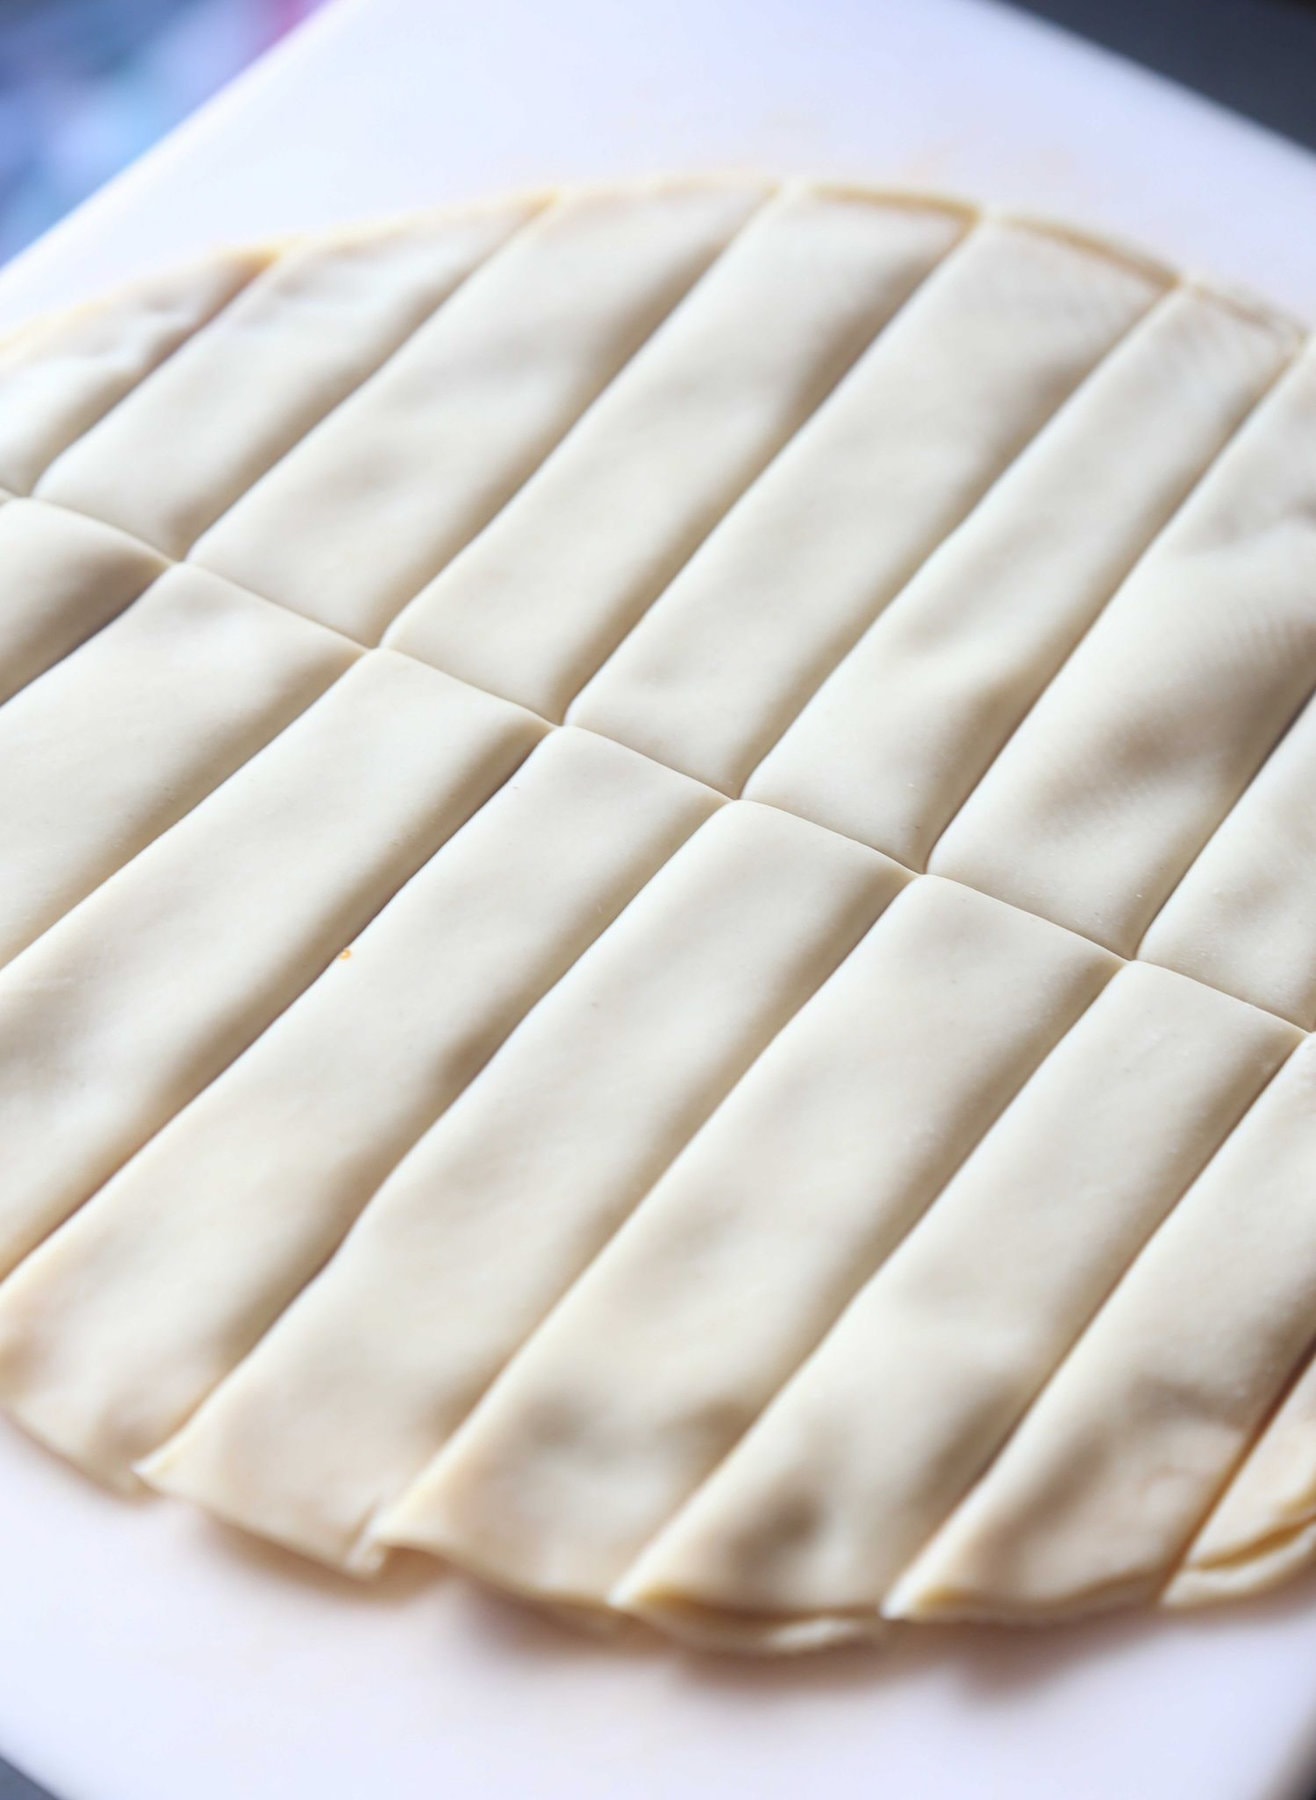 Pie crust cut into strips